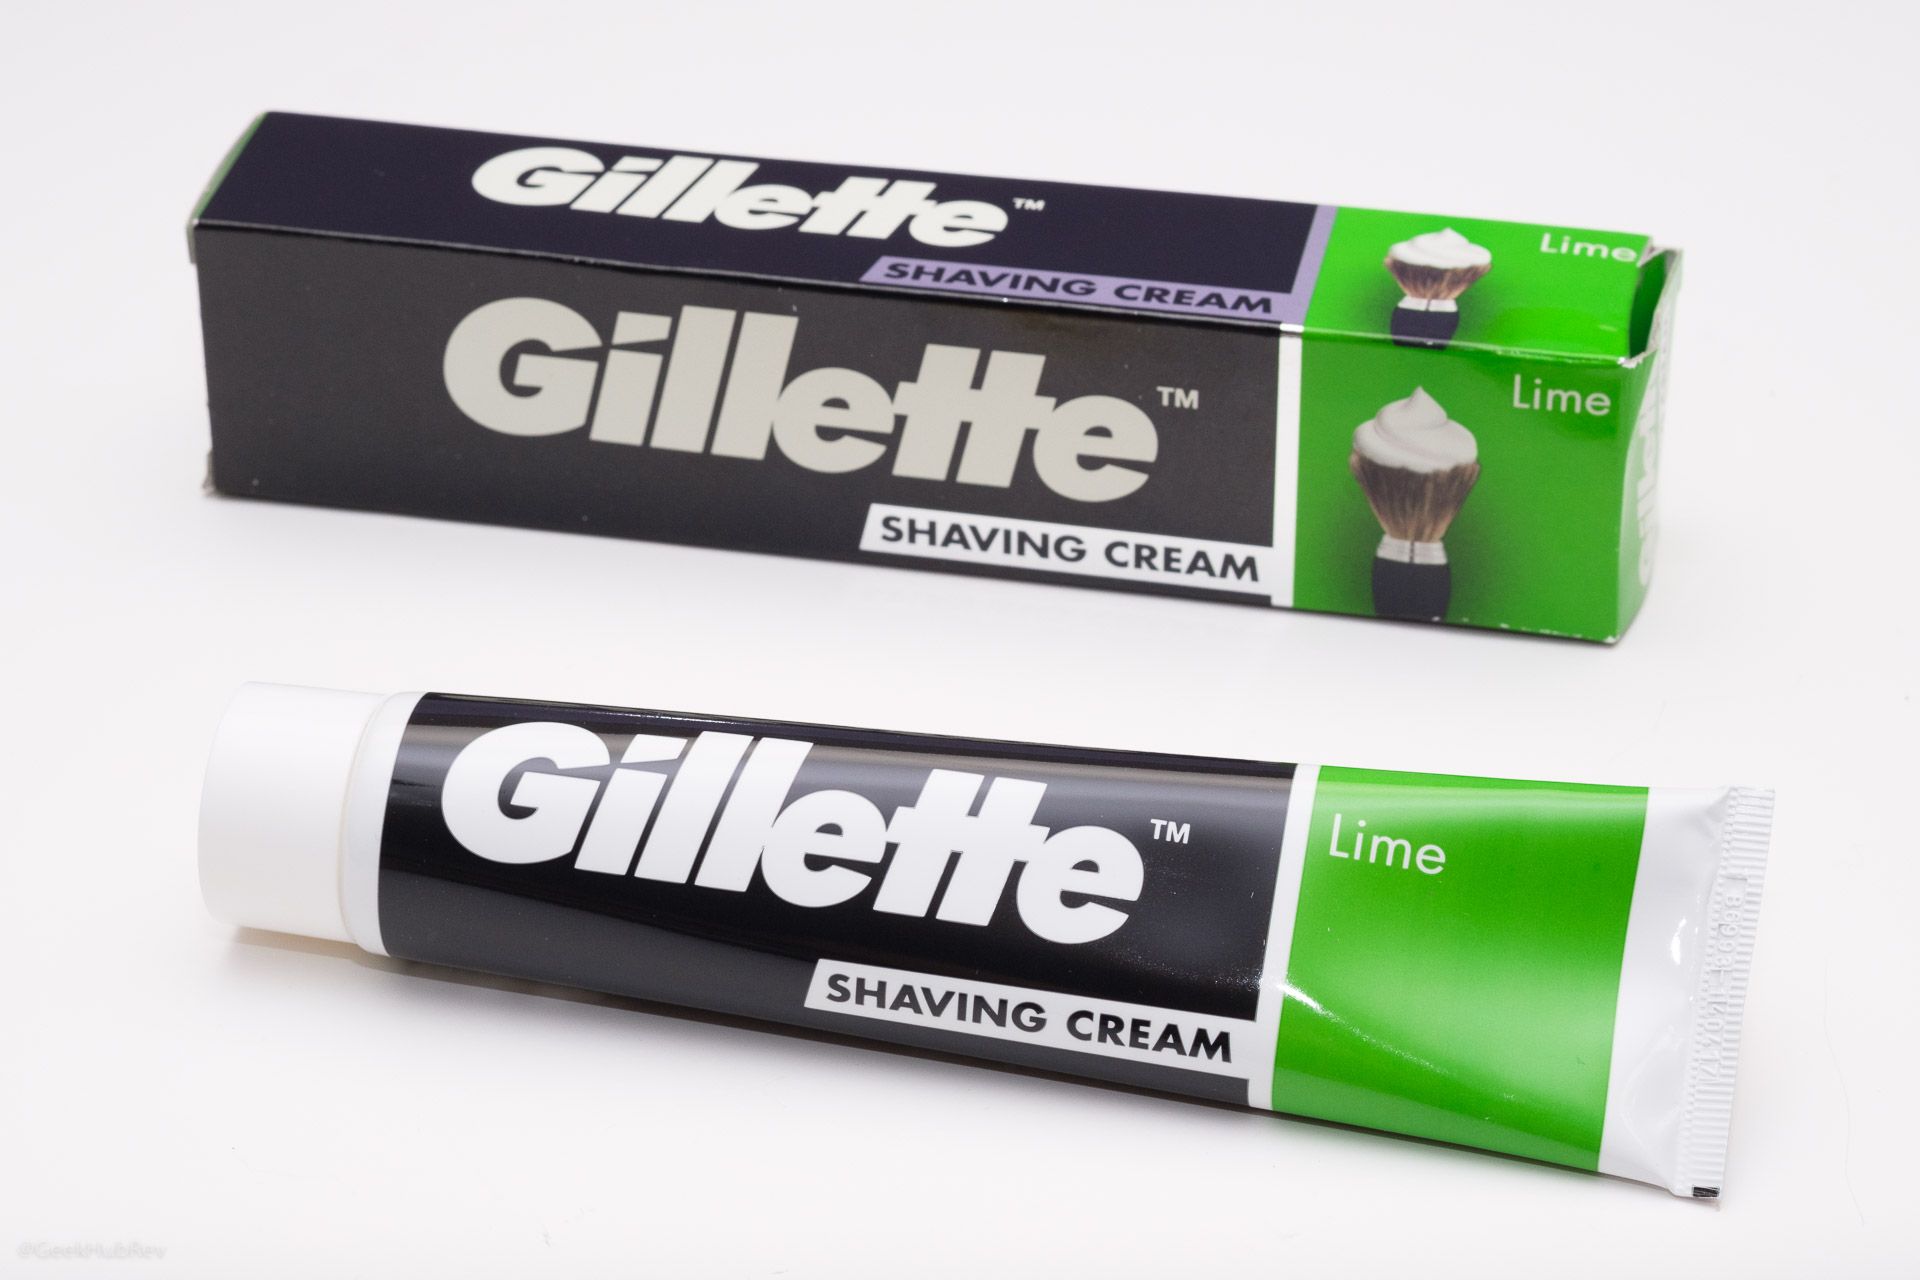 Opakowanie kremu do golenia Gillette Shaving Cream